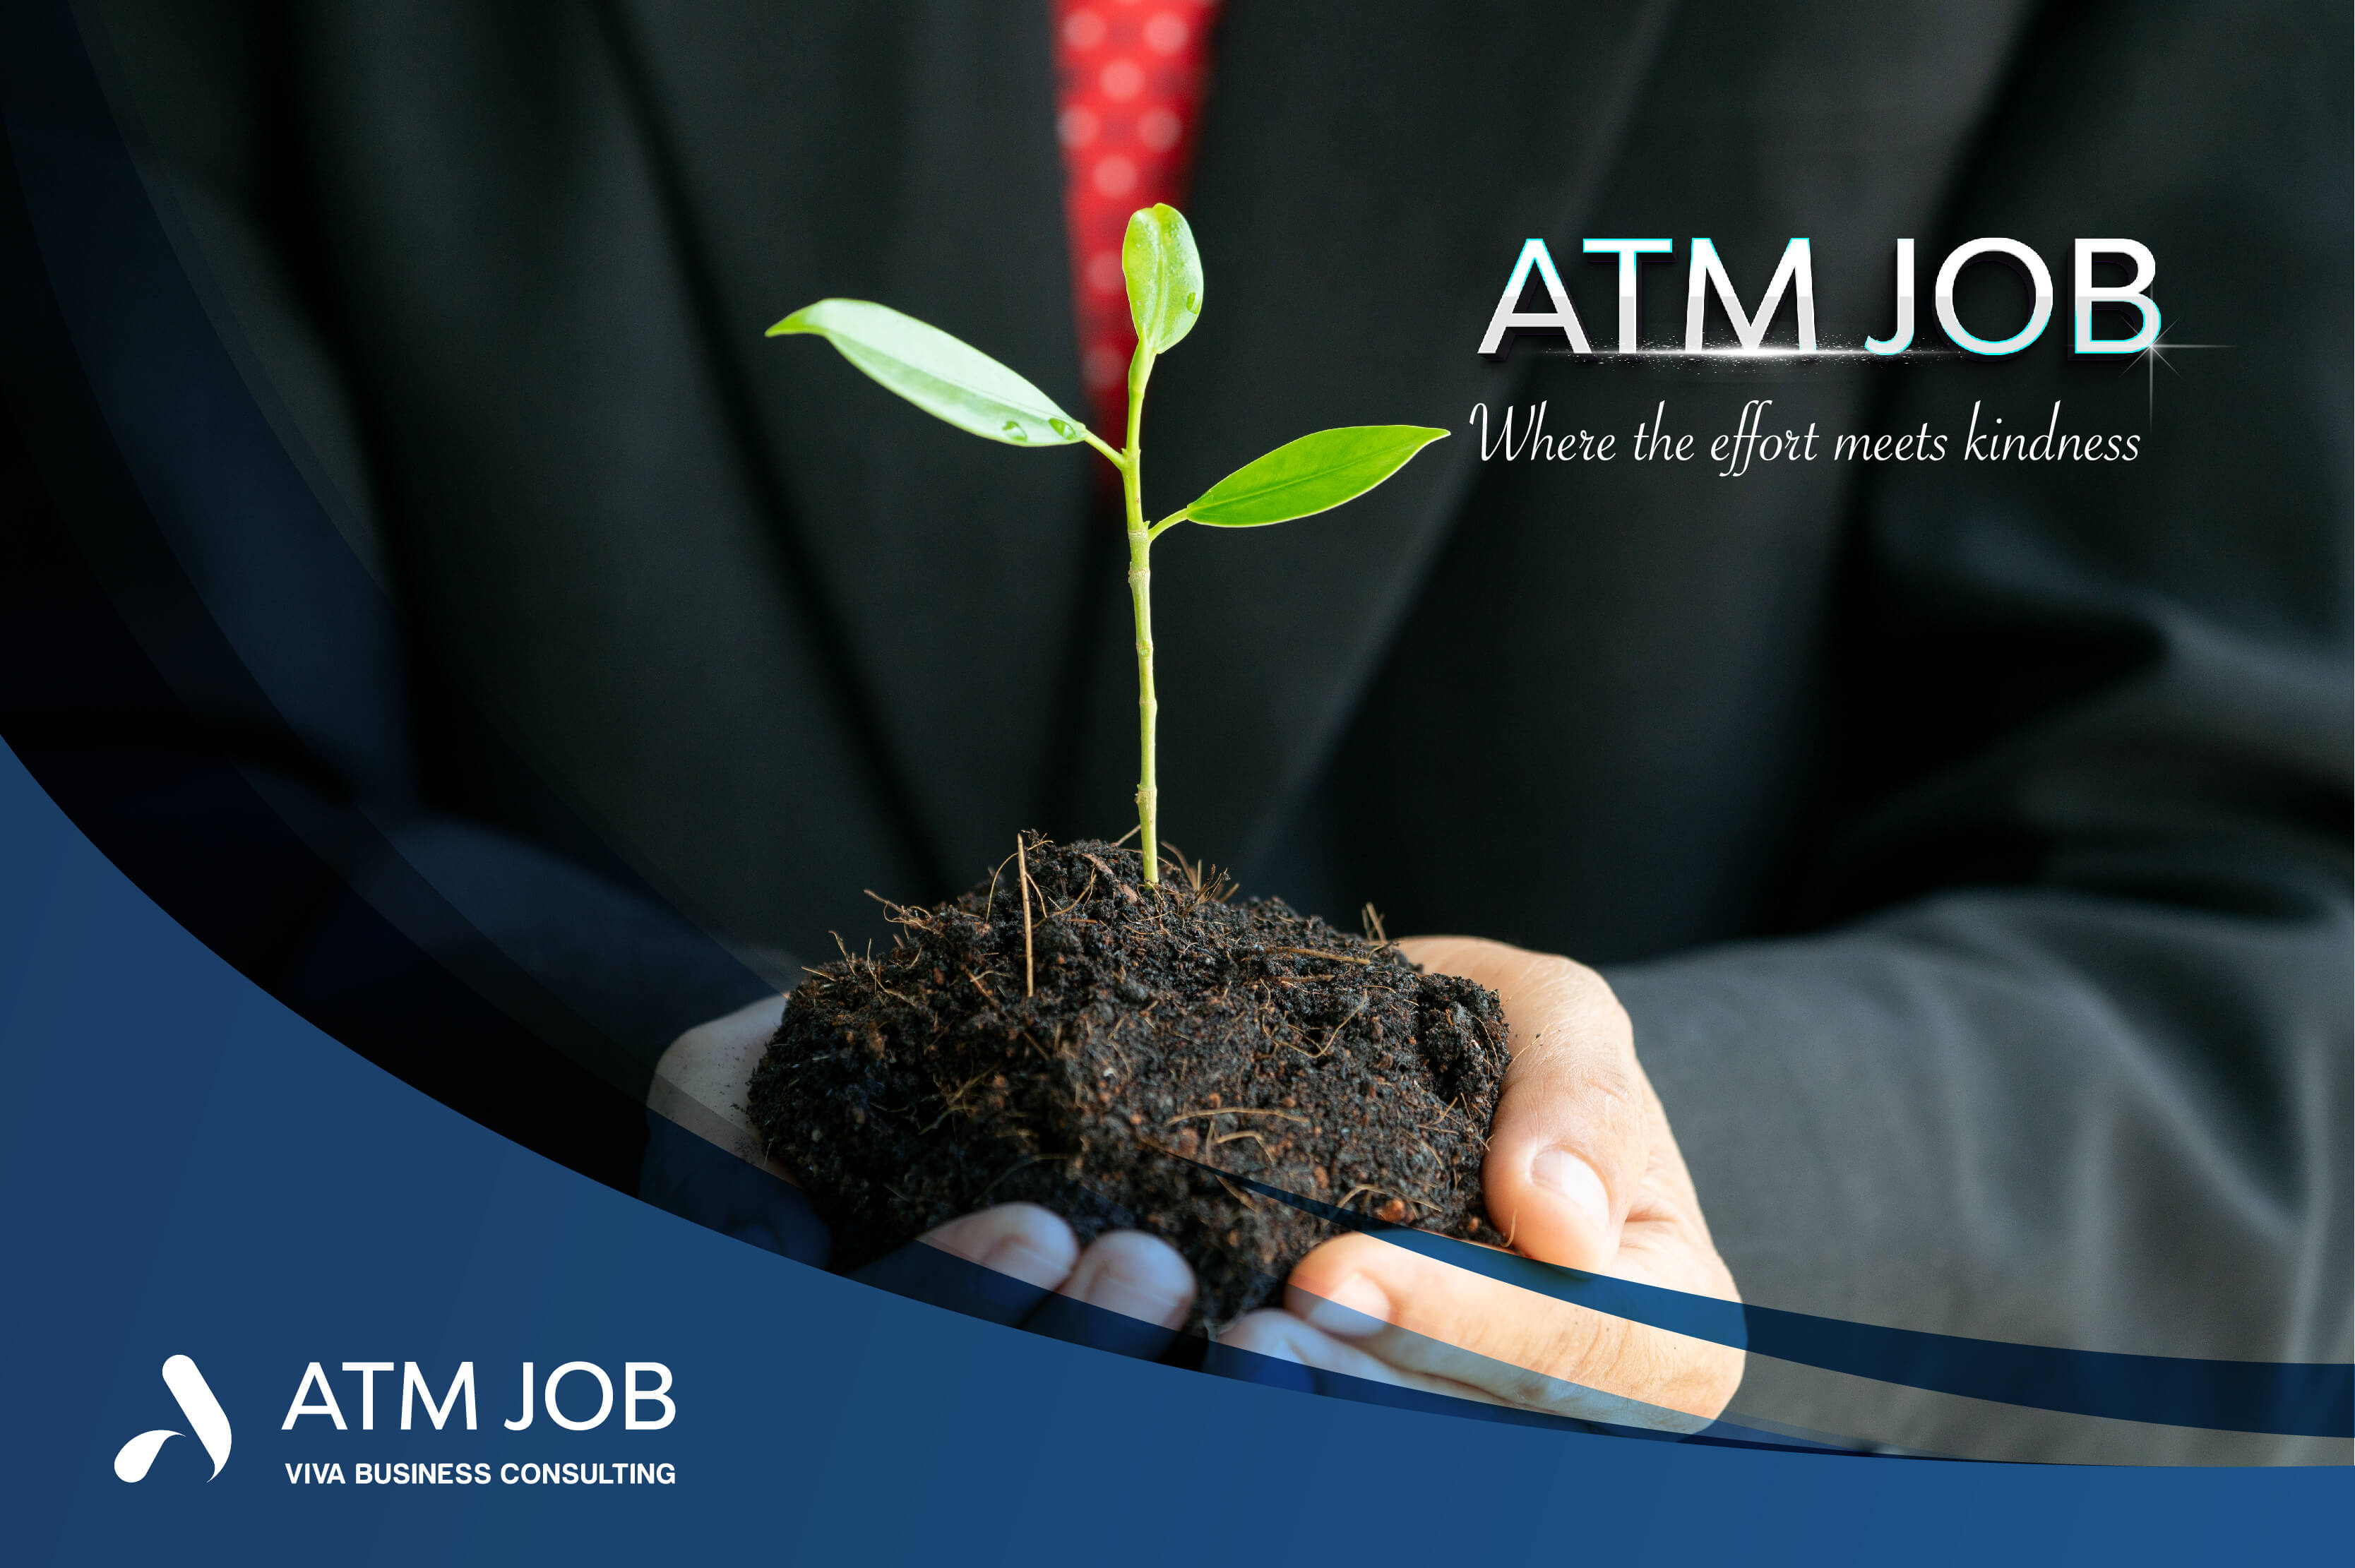 ATM JOB “Where The Effort Meets Kindness”